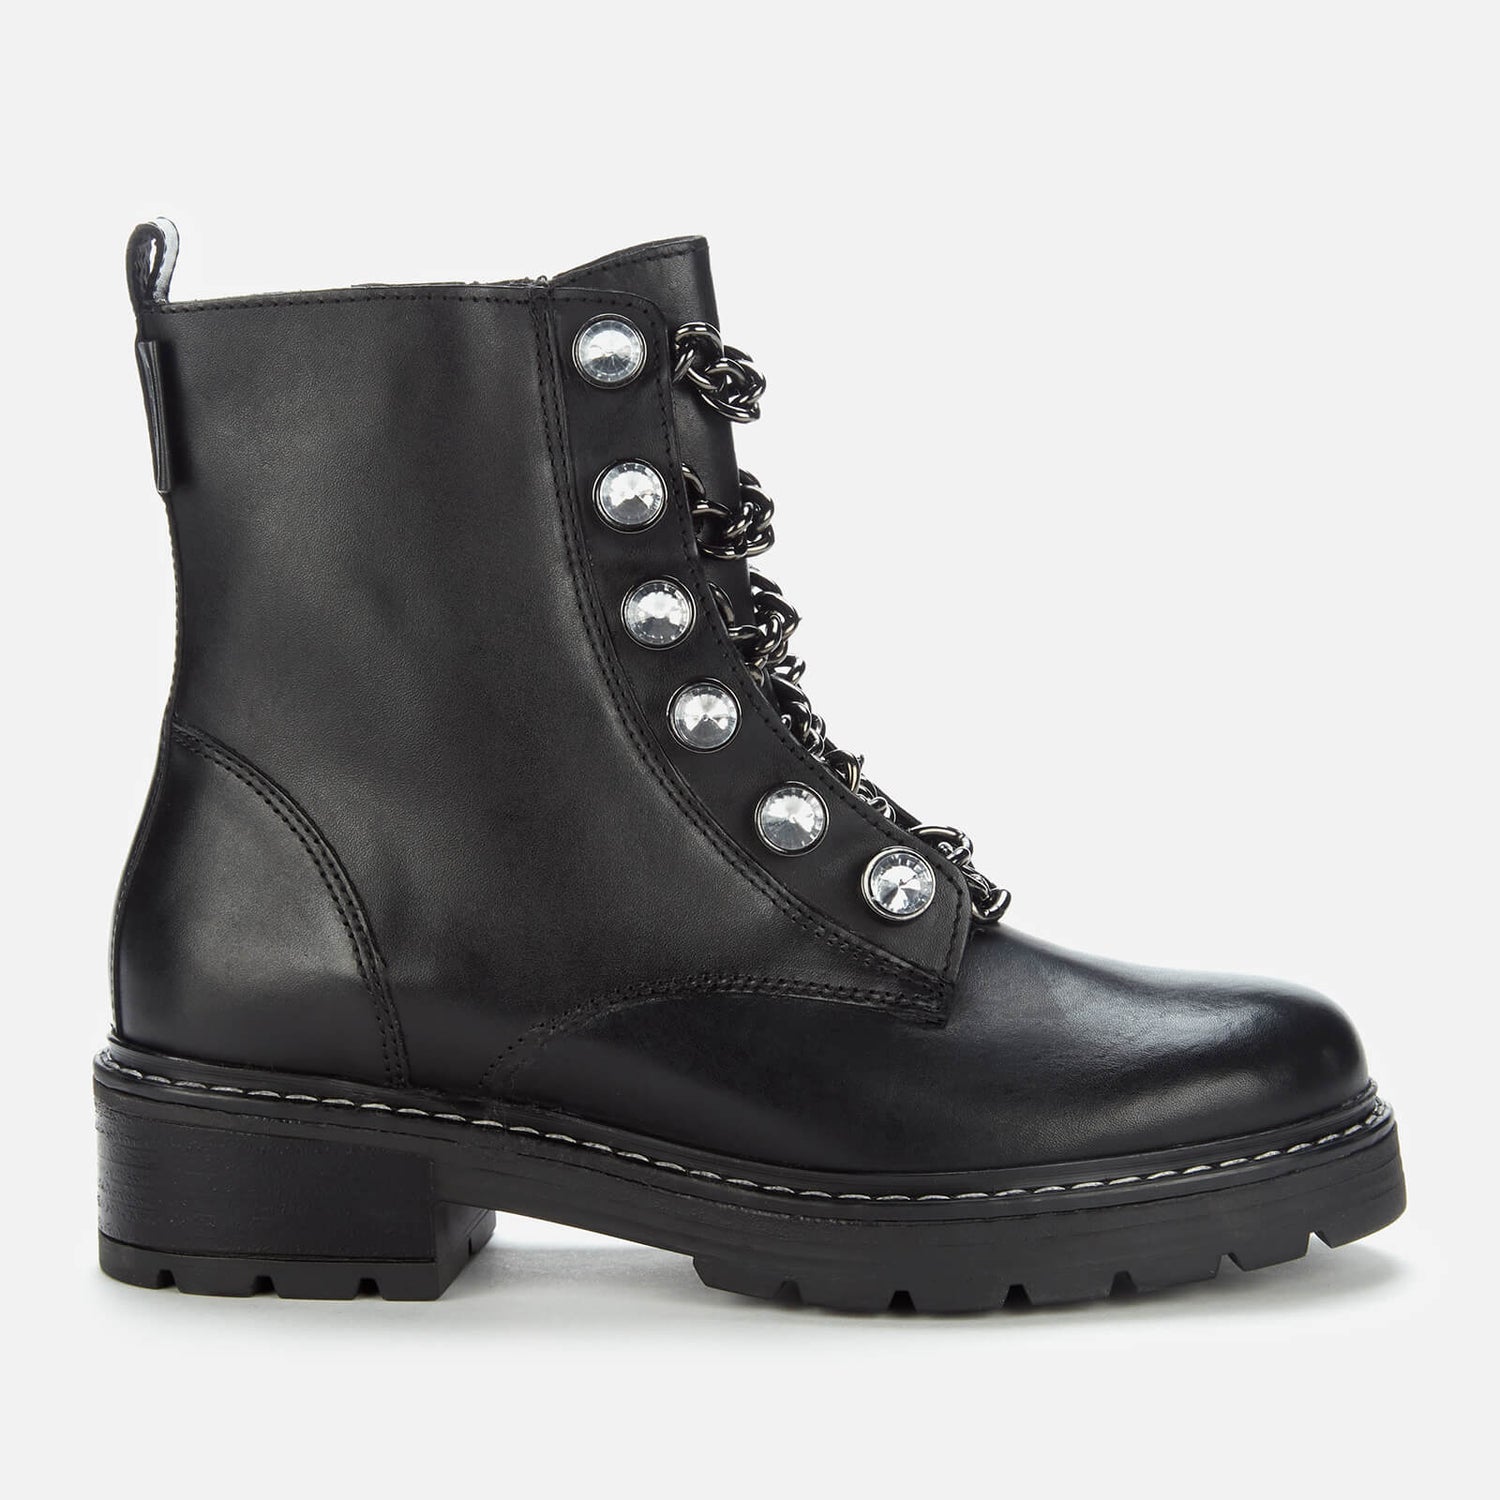 Kurt Geiger London Women's Bax 2 Leather Boots - Black | FREE UK ...